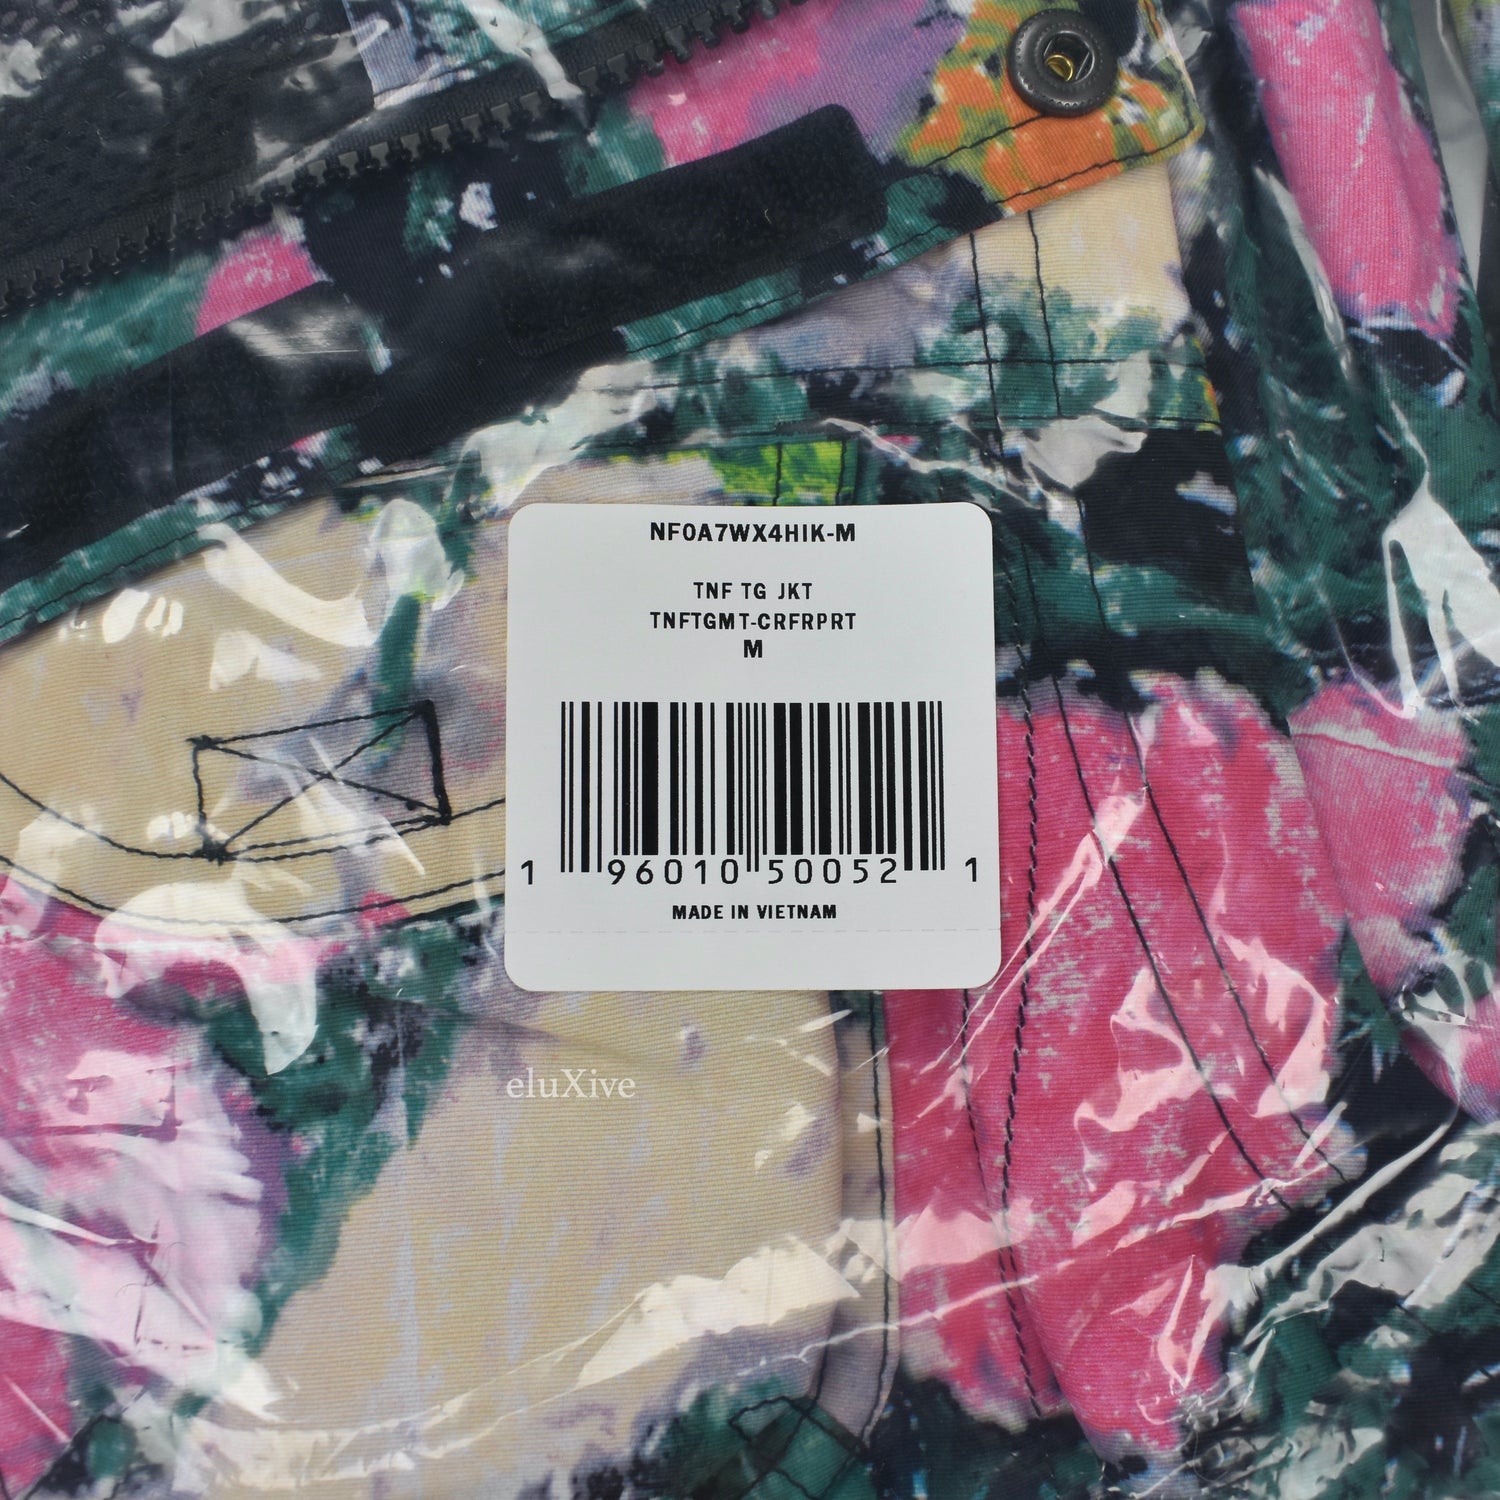 Supreme x The North Face Trekking Convertible Jacket 'Flowers' | Multi-Color | Men's Size XL